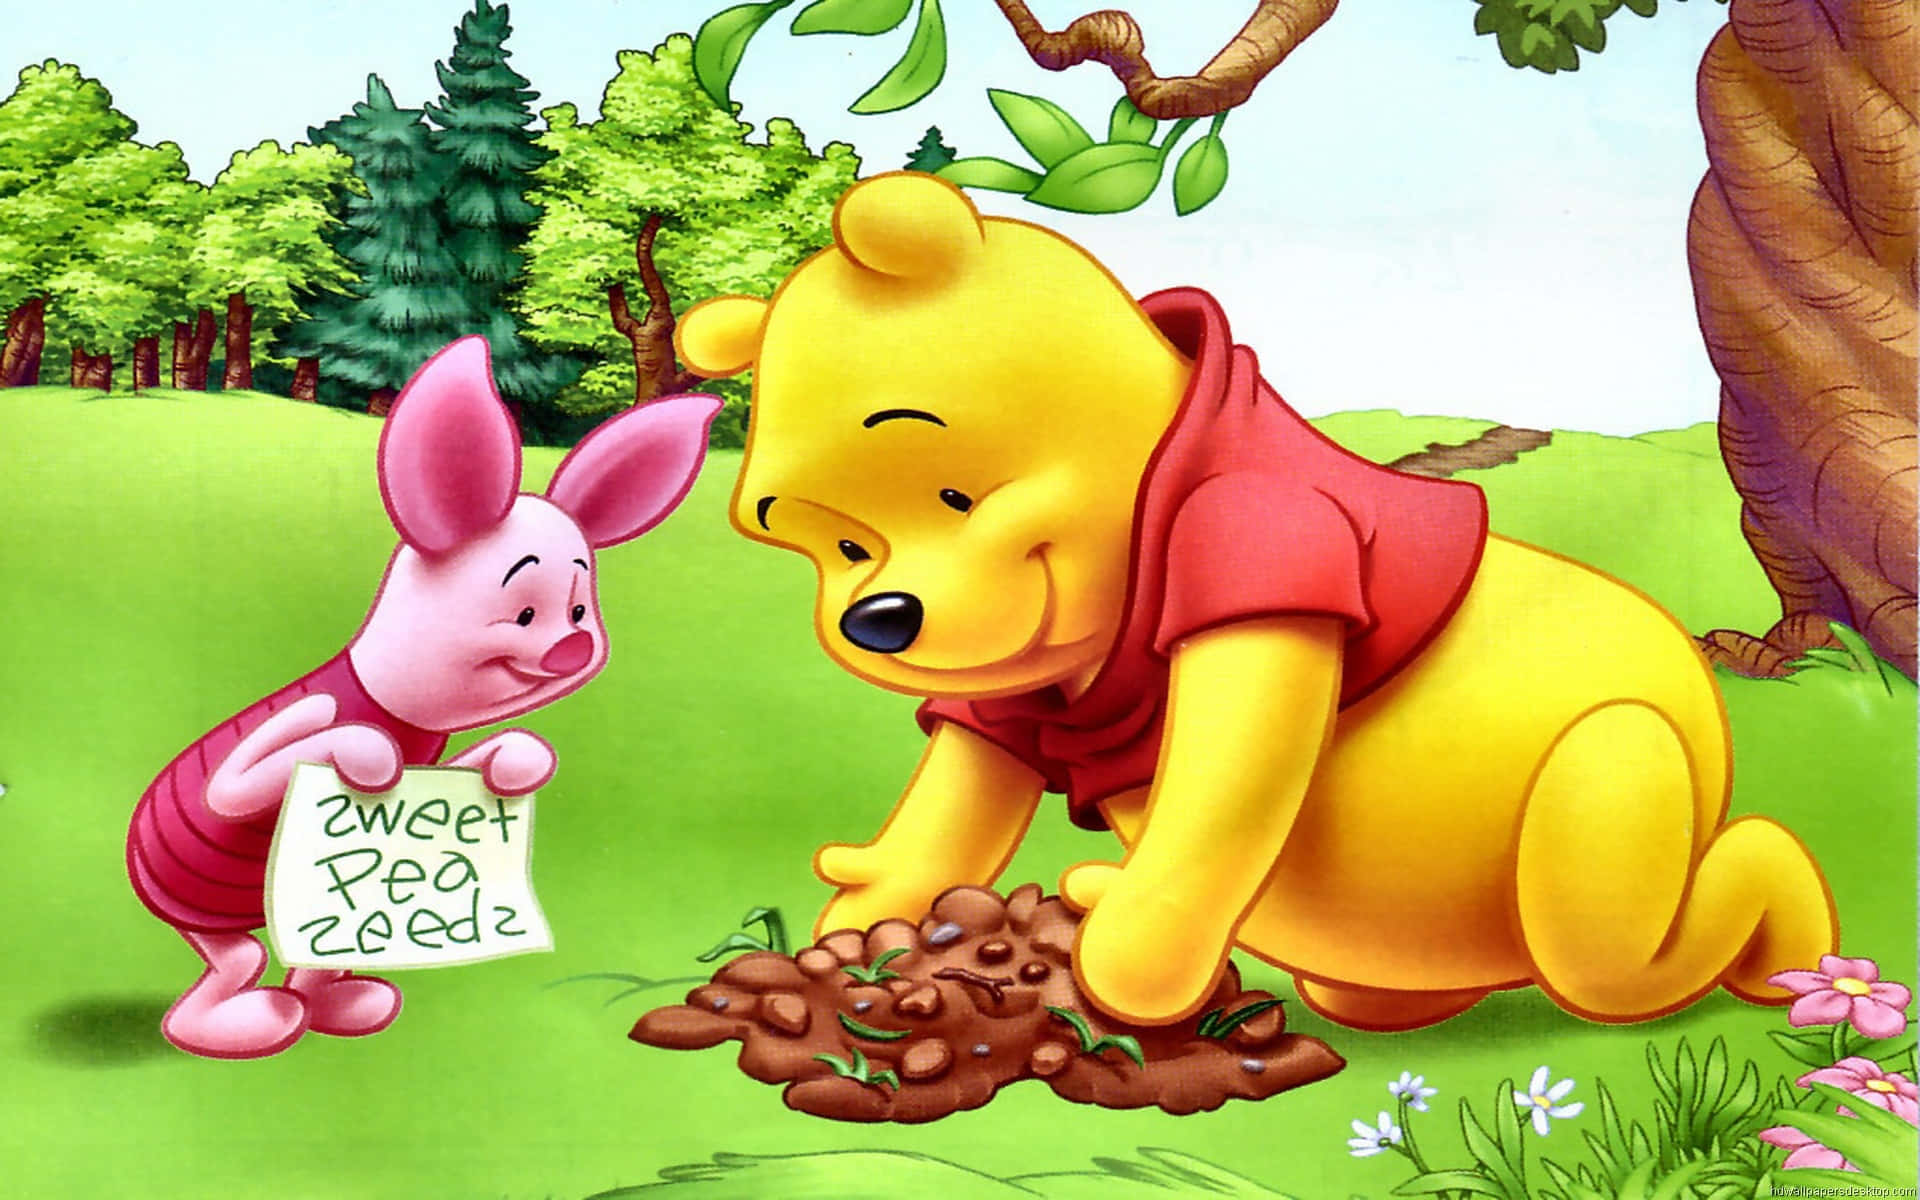 “cuddling With Winnie The Pooh”